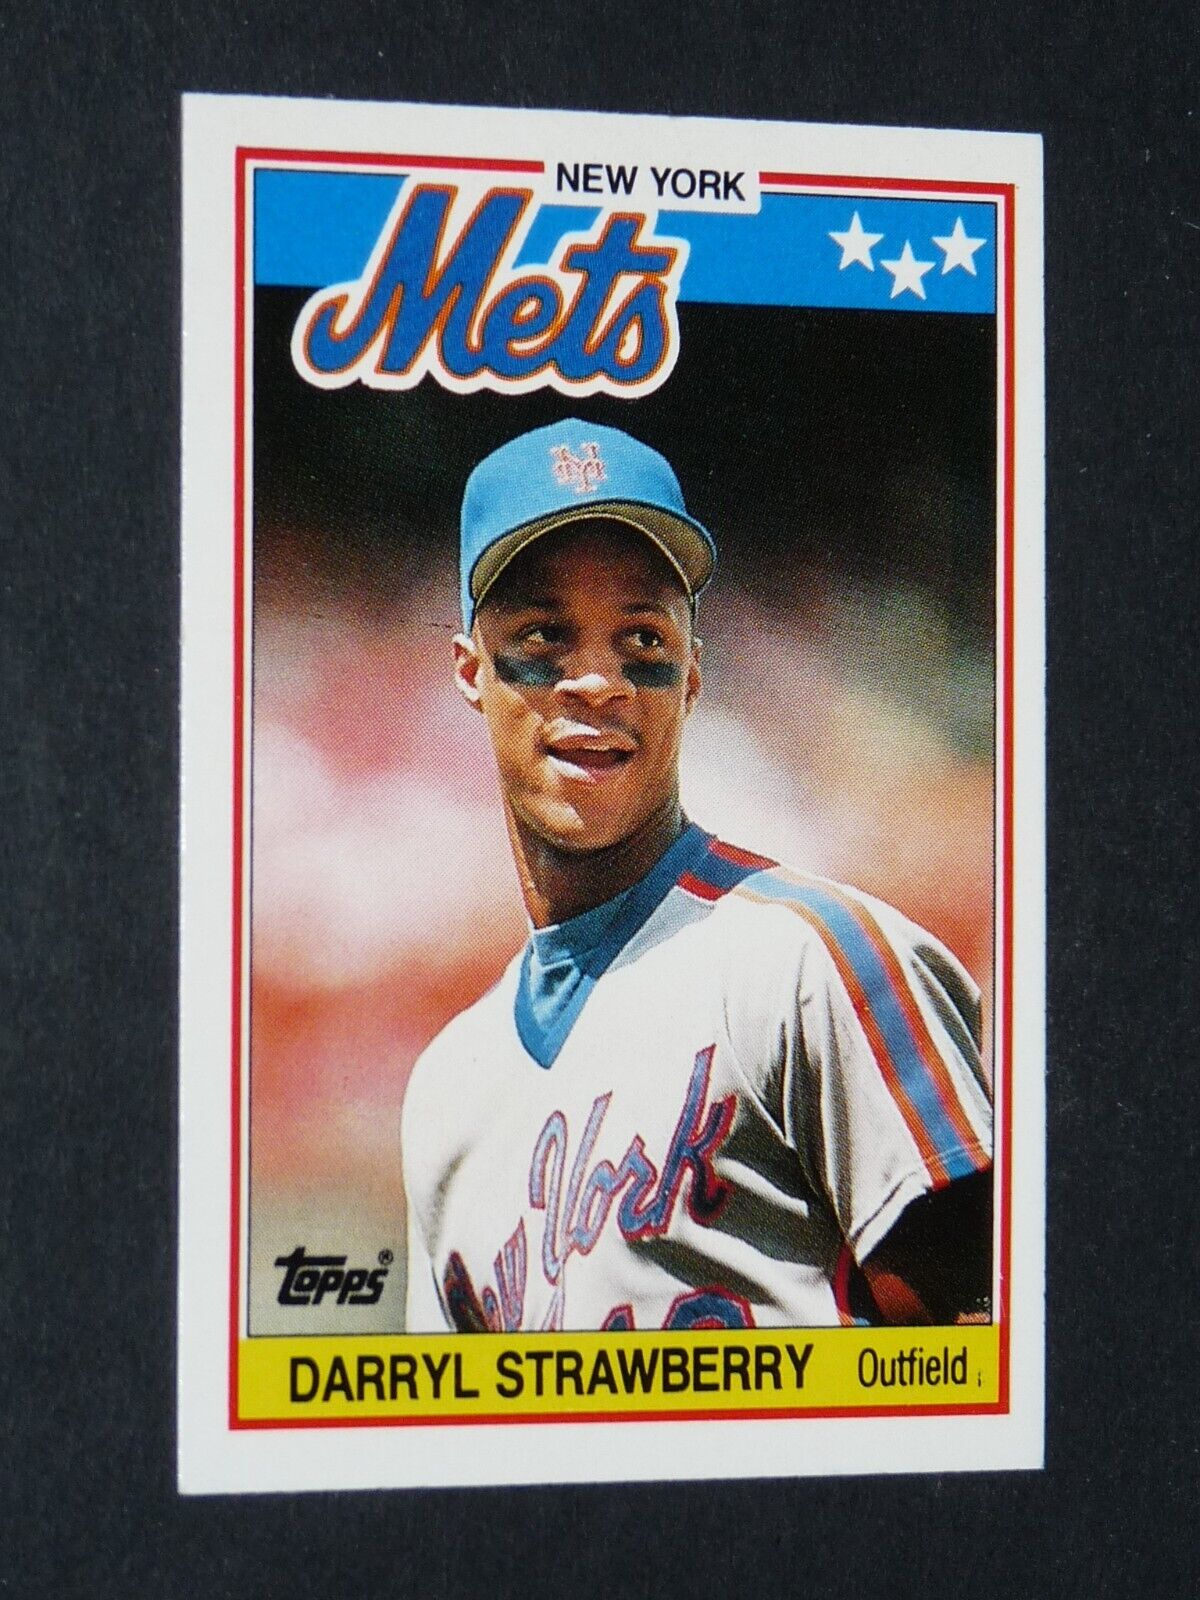 1988 TOPPS MINI BASEBALL CARD #76 DARRYL STRAWBERRY NEW YORK METS